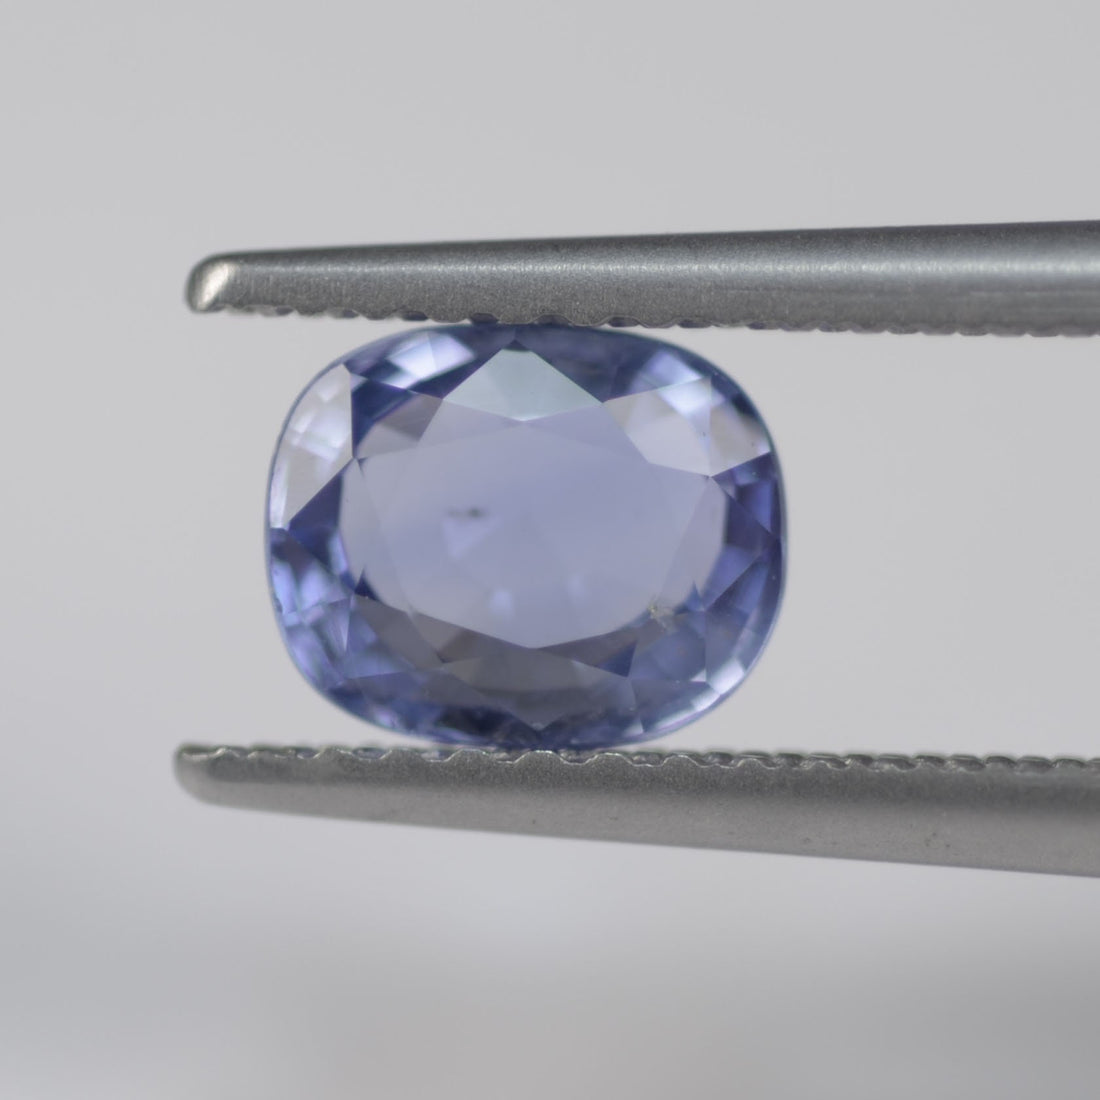 0.99 cts Unheated Natural Blue Sapphire Loose Gemstone Cushion Cut